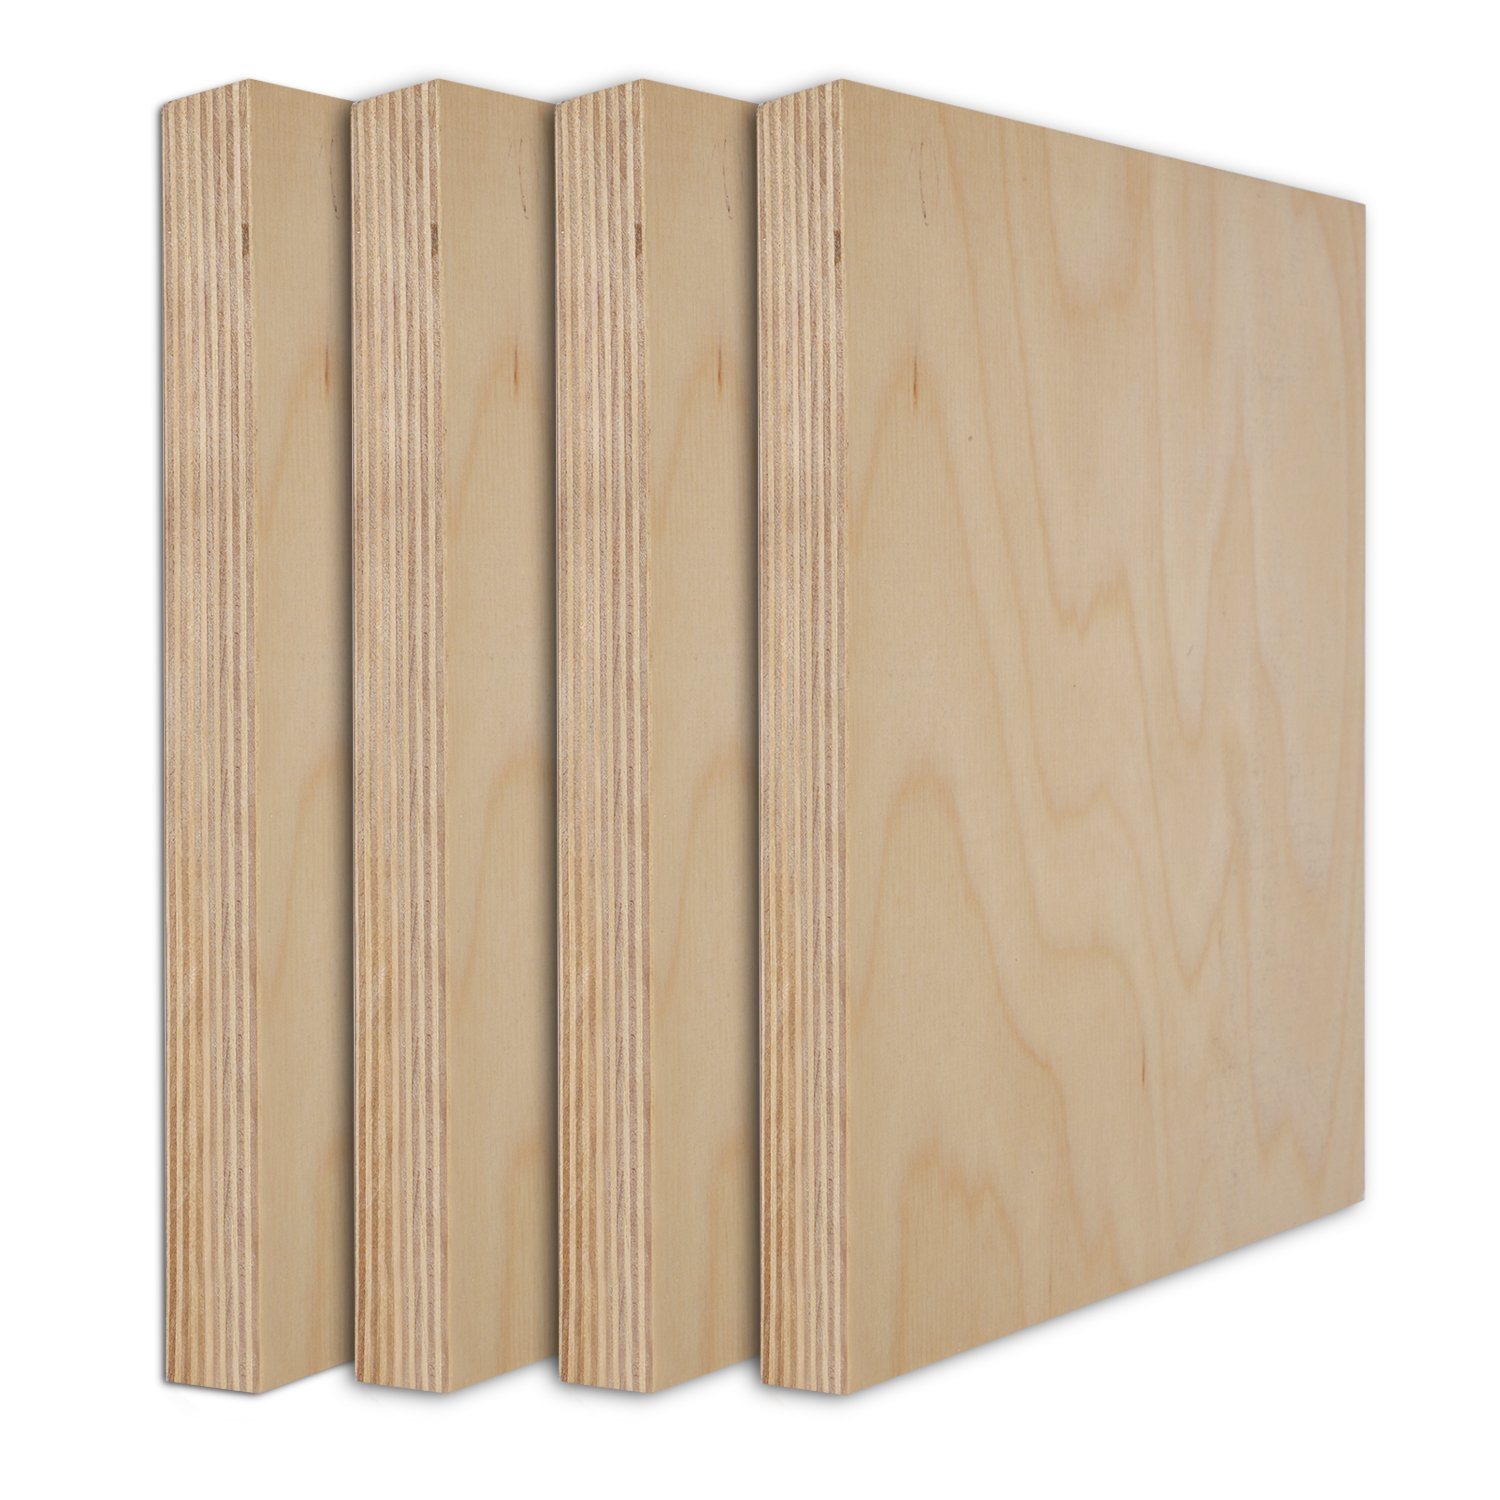 Excellent Grade Birch Commercial Plywood Board for Sale Wood Veneer